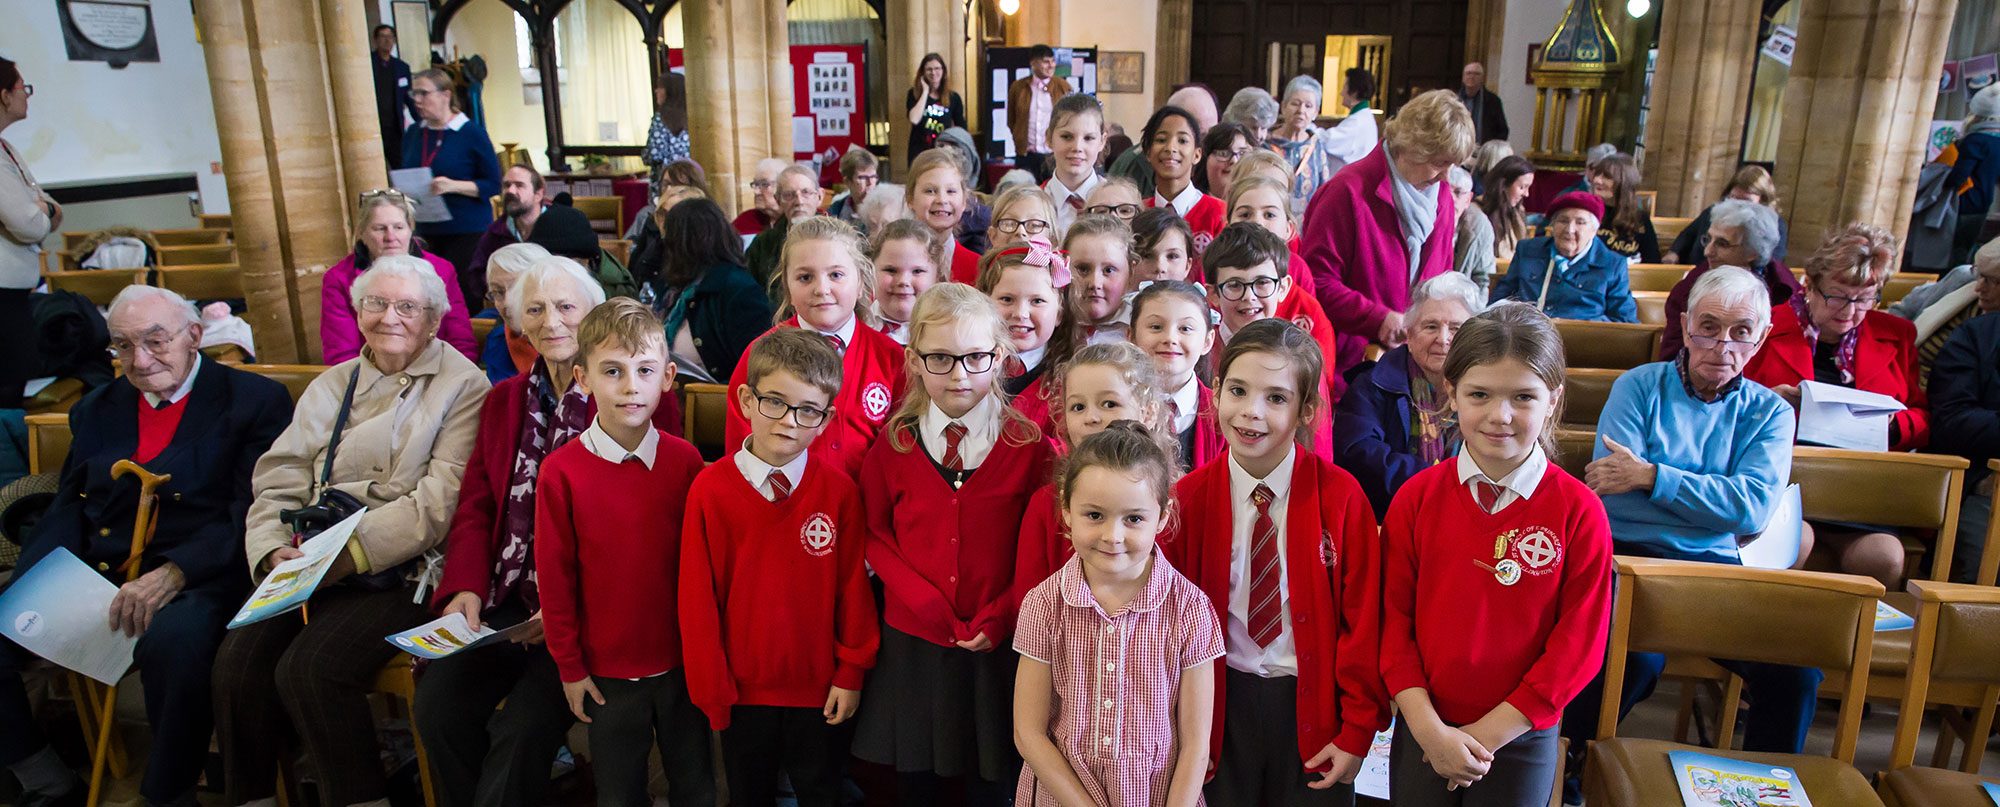 Choir from St John's Church of England Primary School